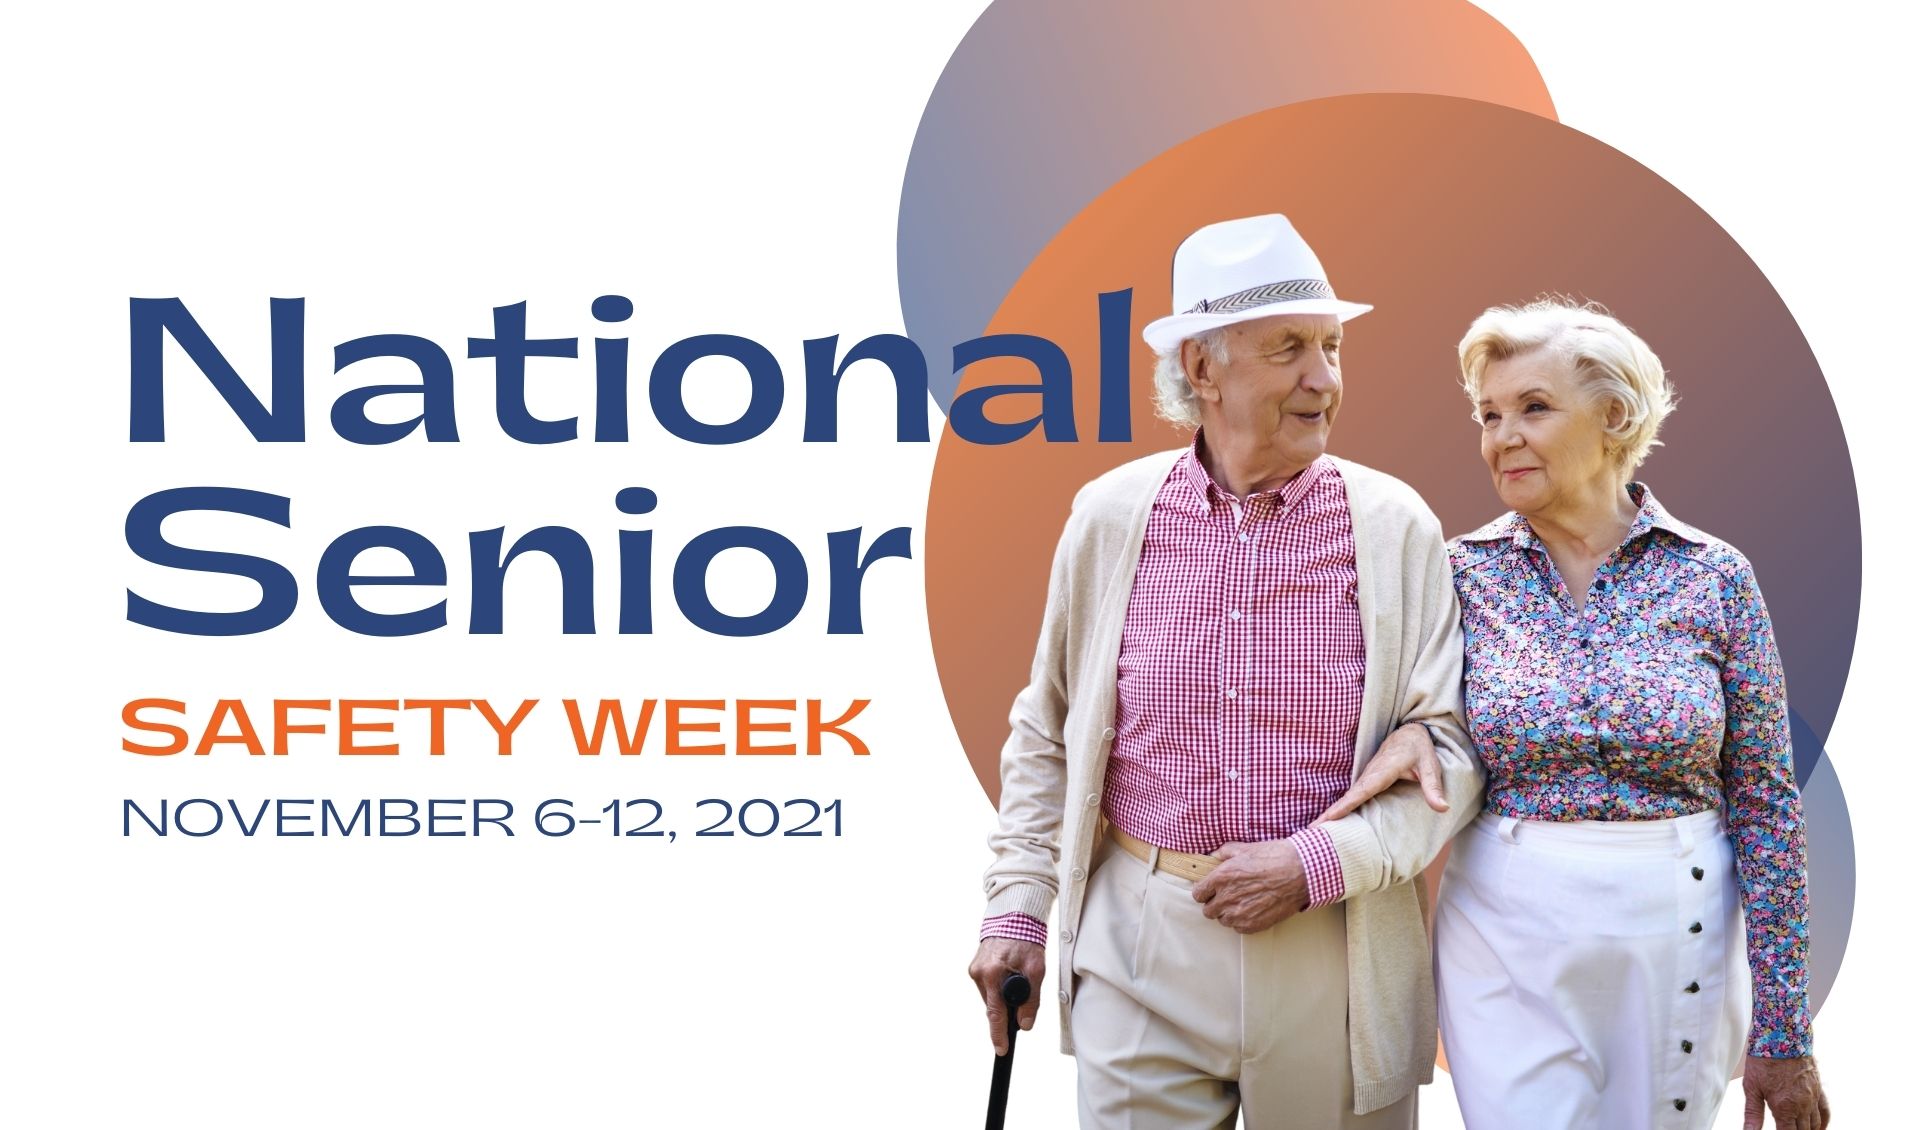 national senior safety week - november 6 - 12 2021